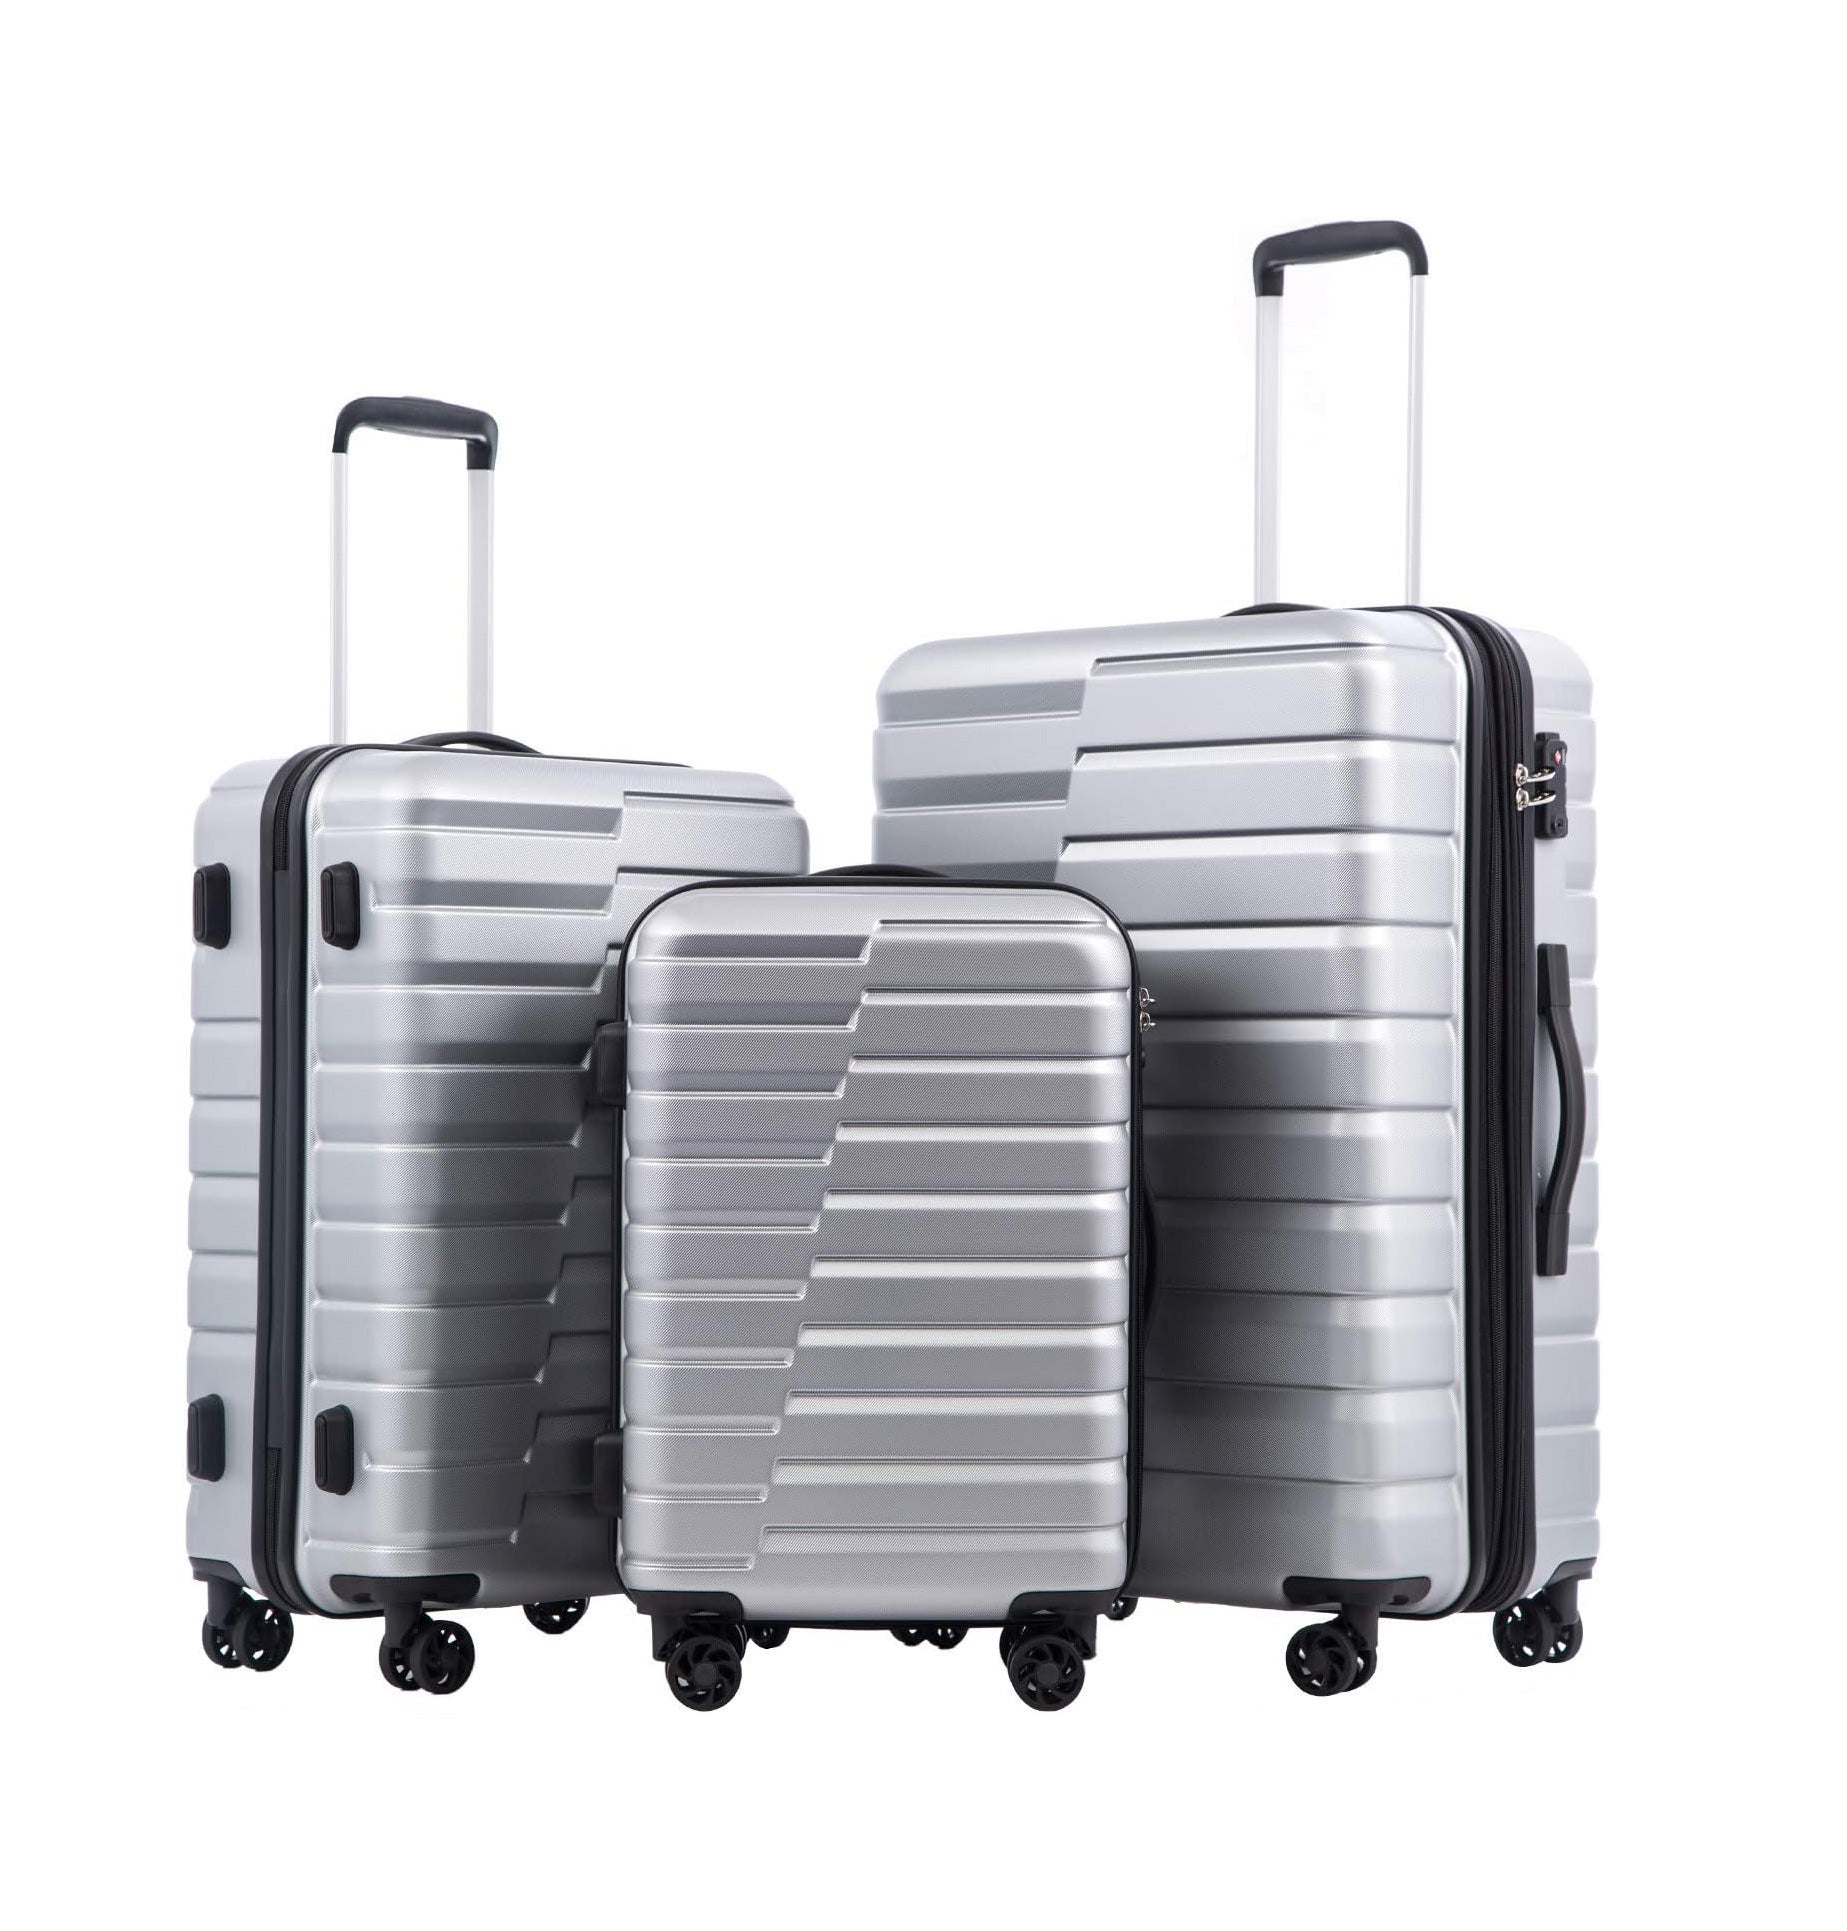 Coolife + Three-Piece Luggage Set